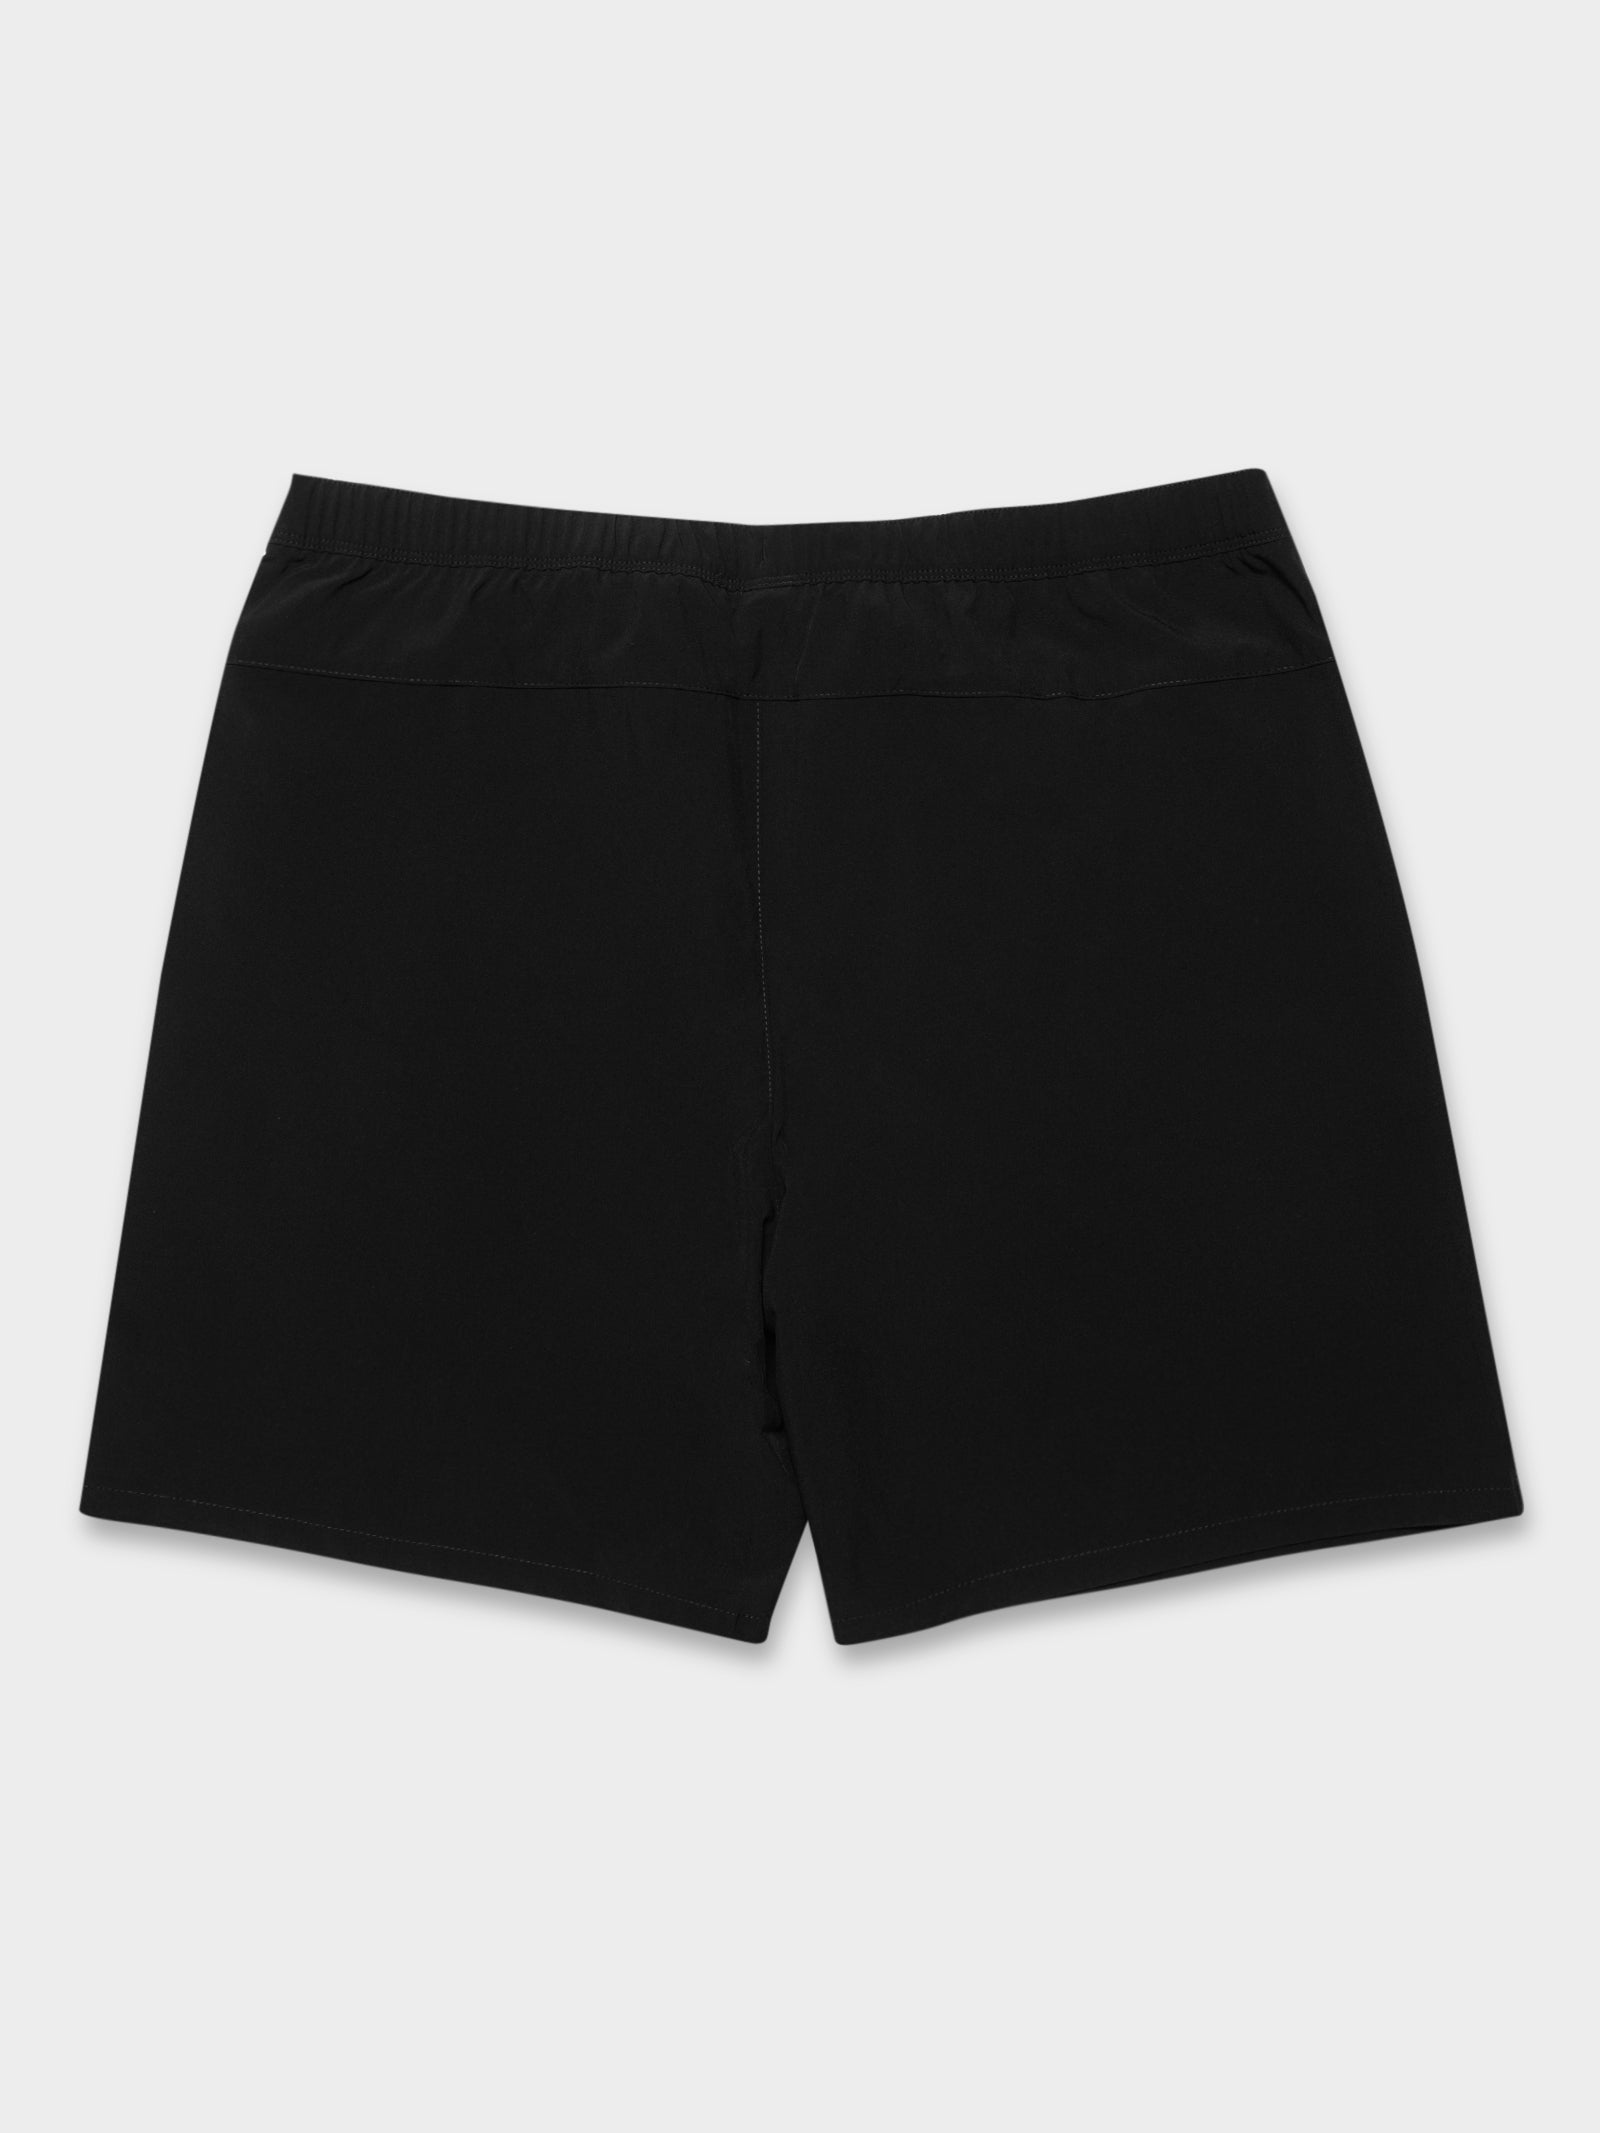 Wander Shorts in Black